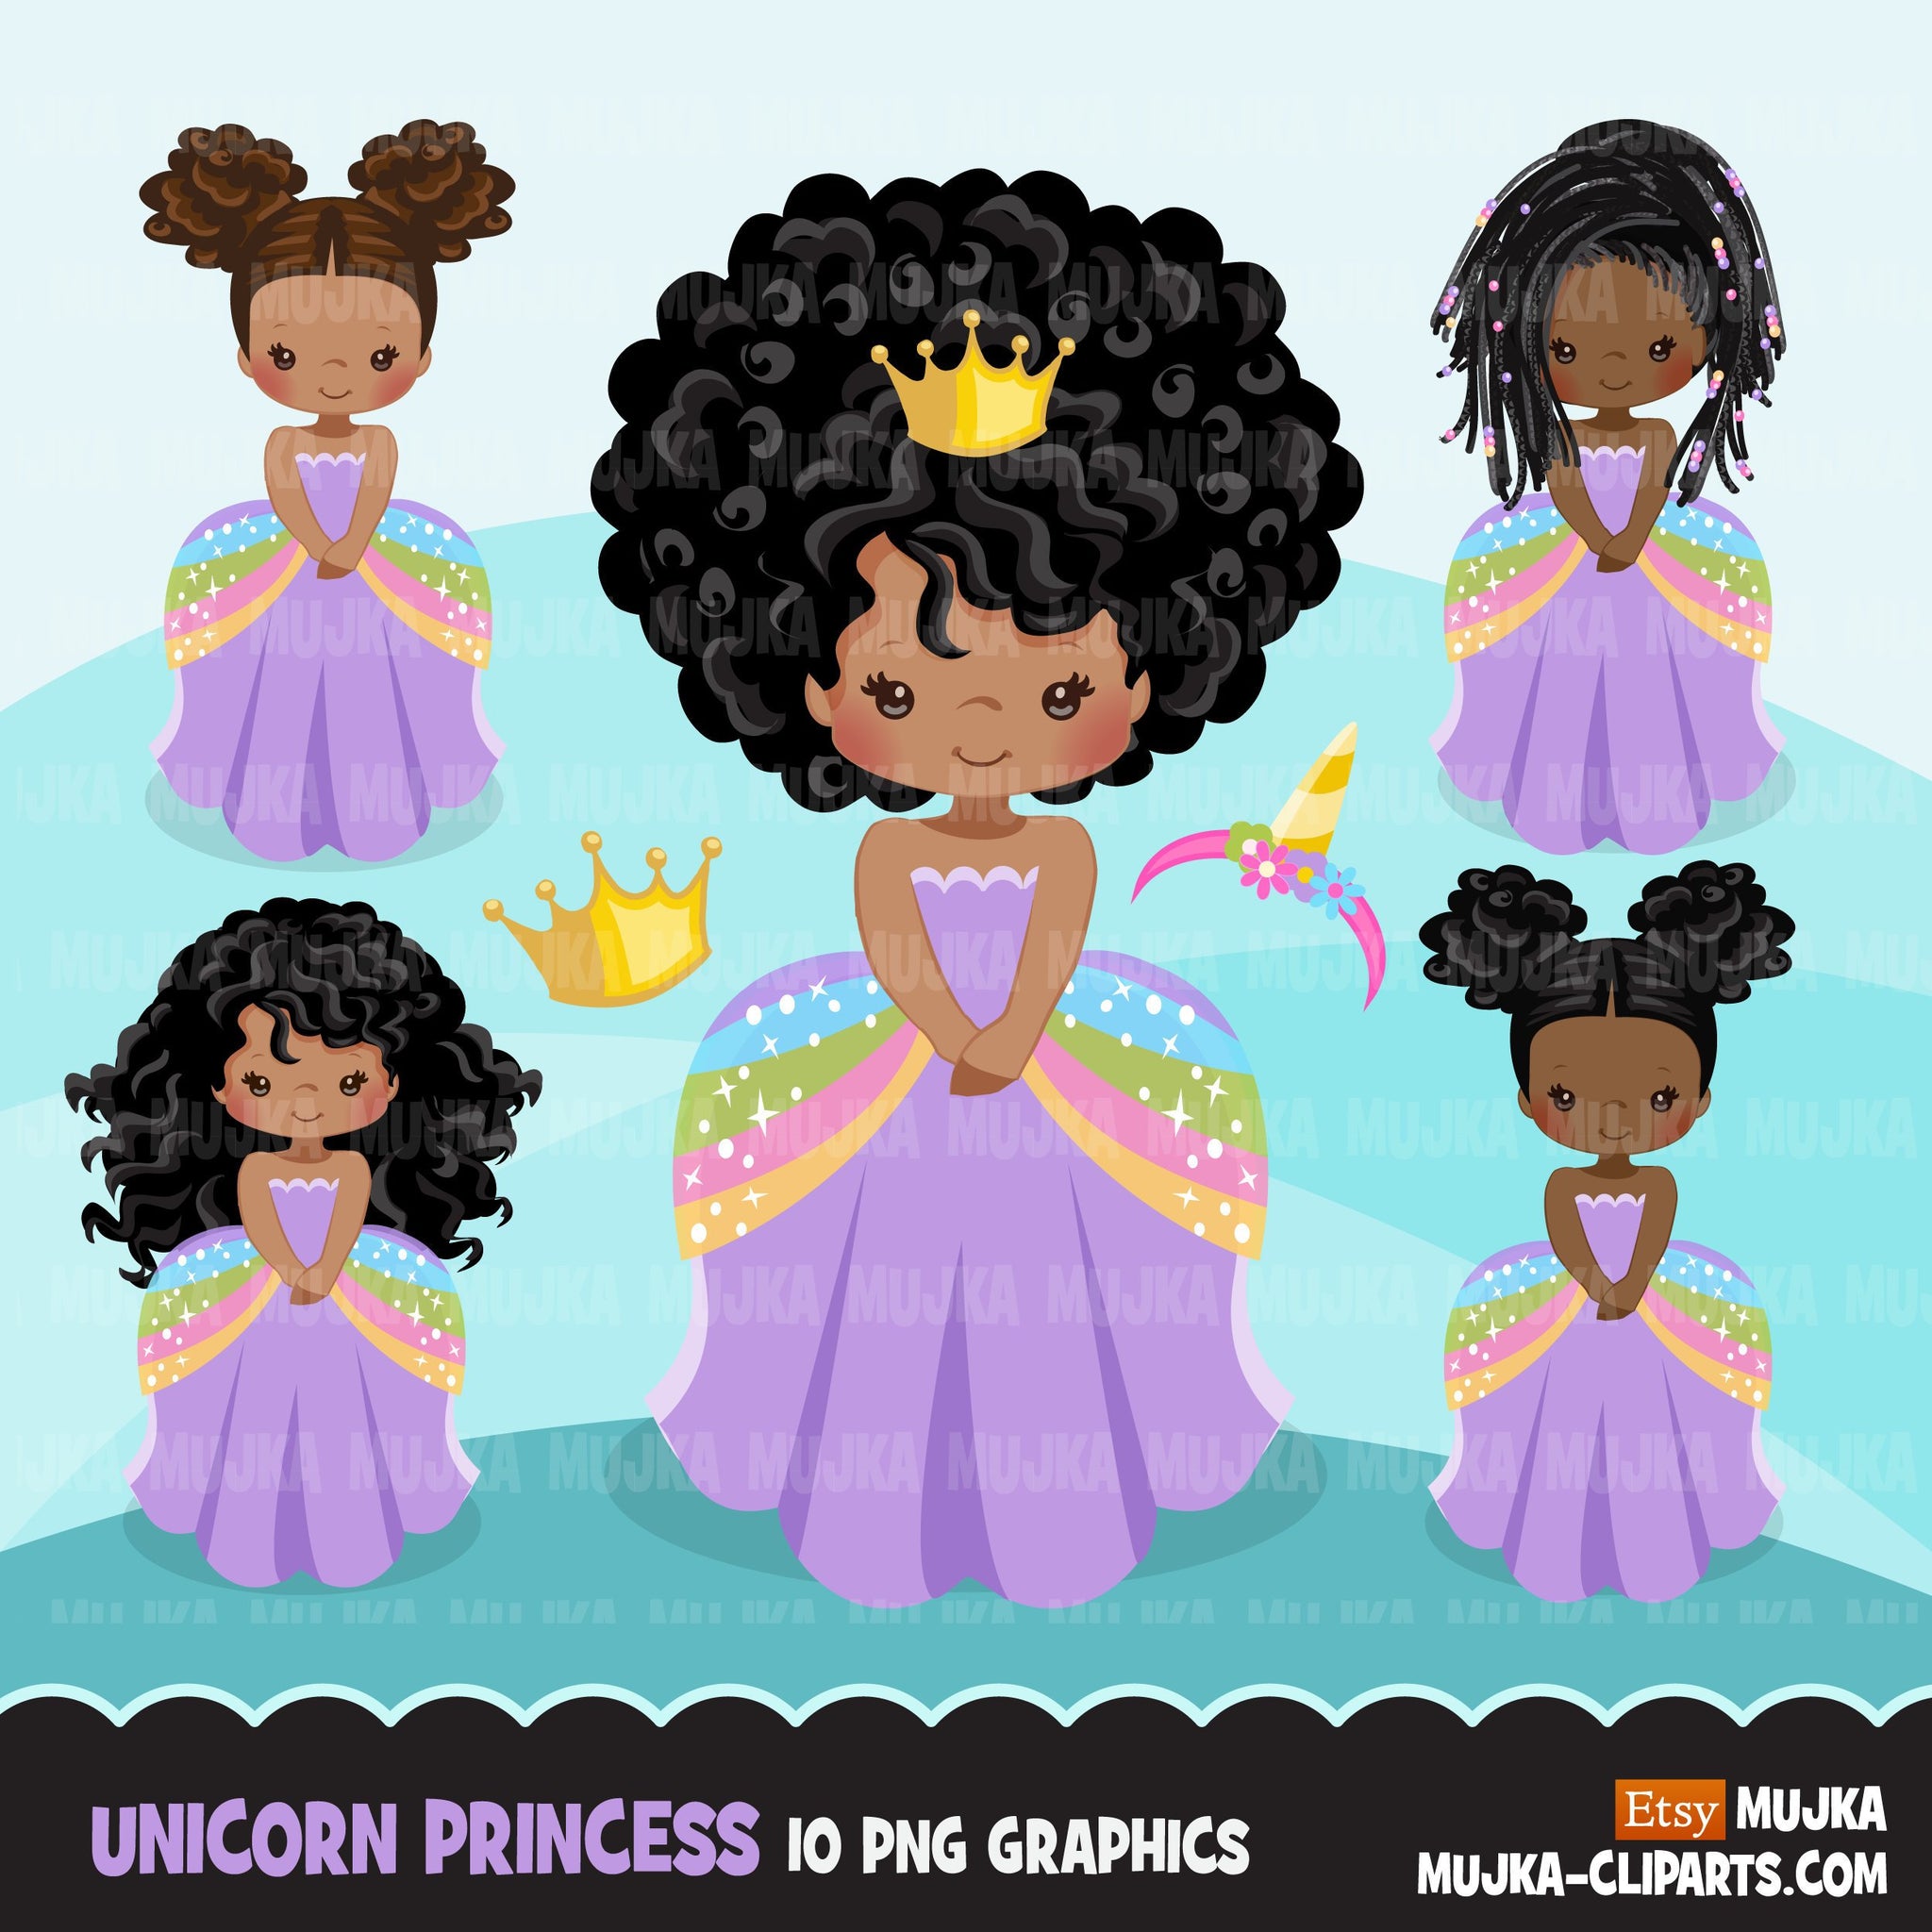 Imágenes prediseñadas de unicornio, princesa negra, regalos de unicornio, chica arco iris, gráficos de cuento de hadas, imágenes prediseñadas de uso comercial